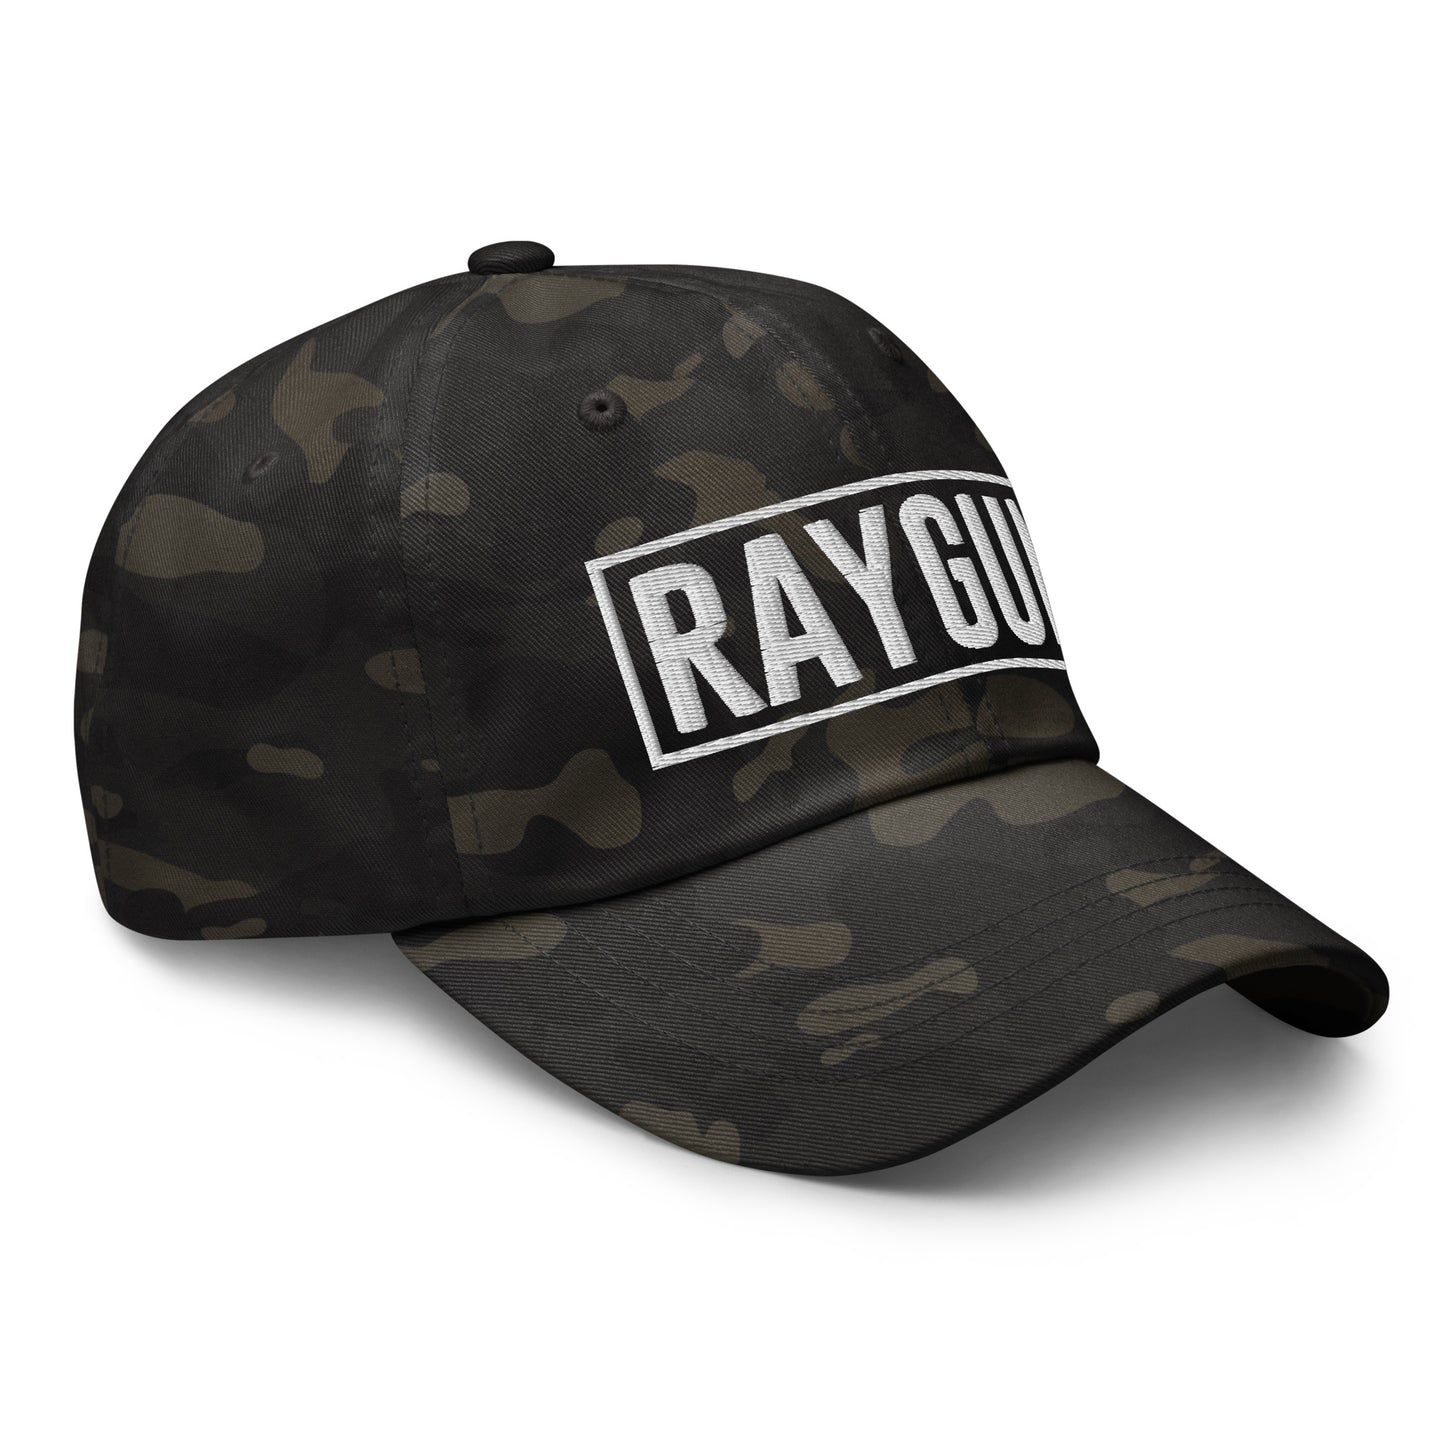 RAYGUN Camo Dad Hat